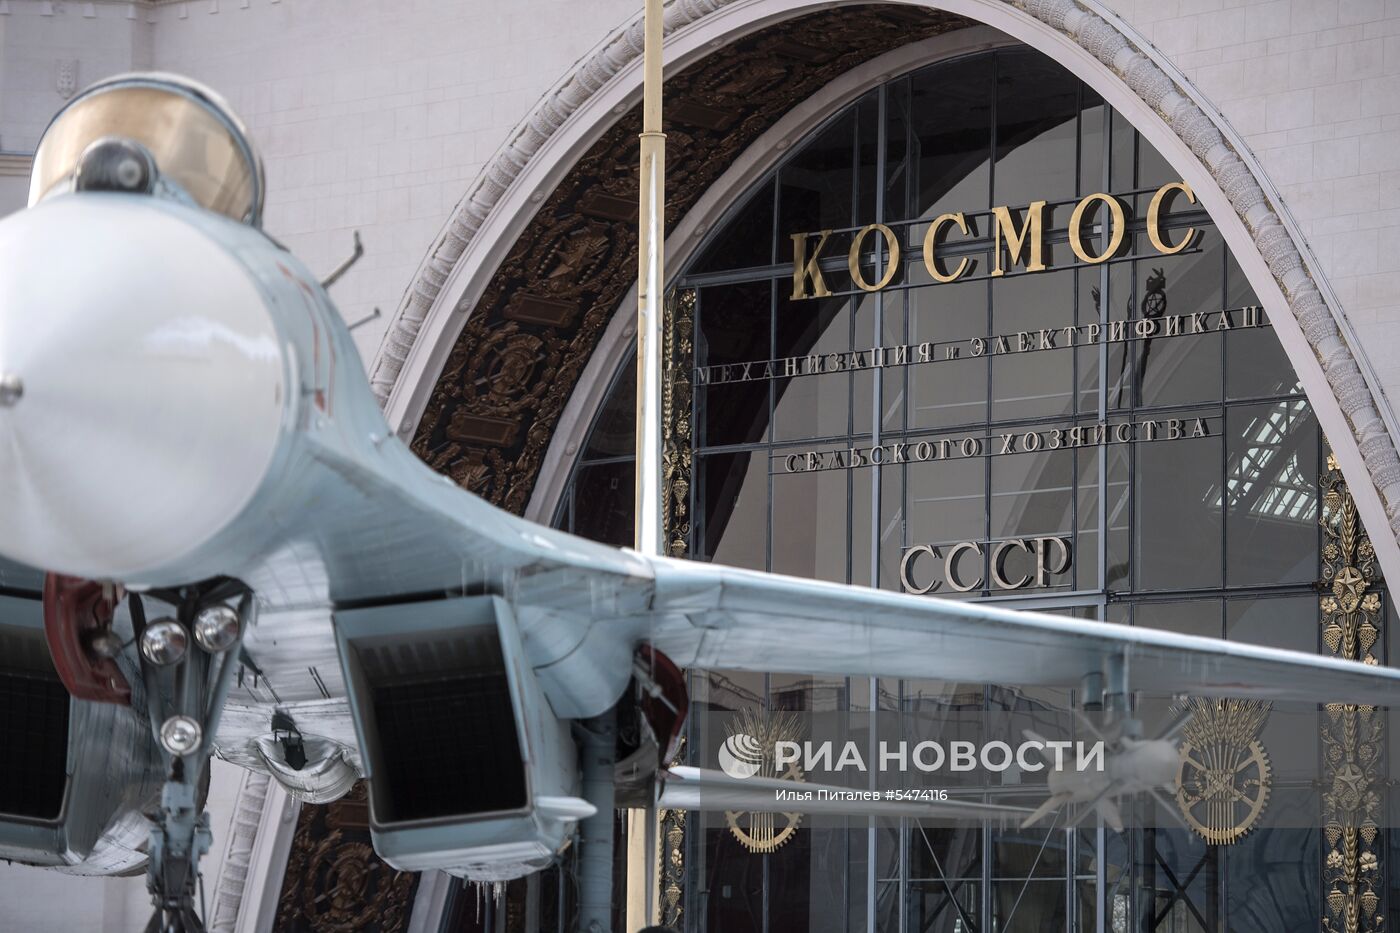 Центр «Космонавтика и авиация» на ВДНХ